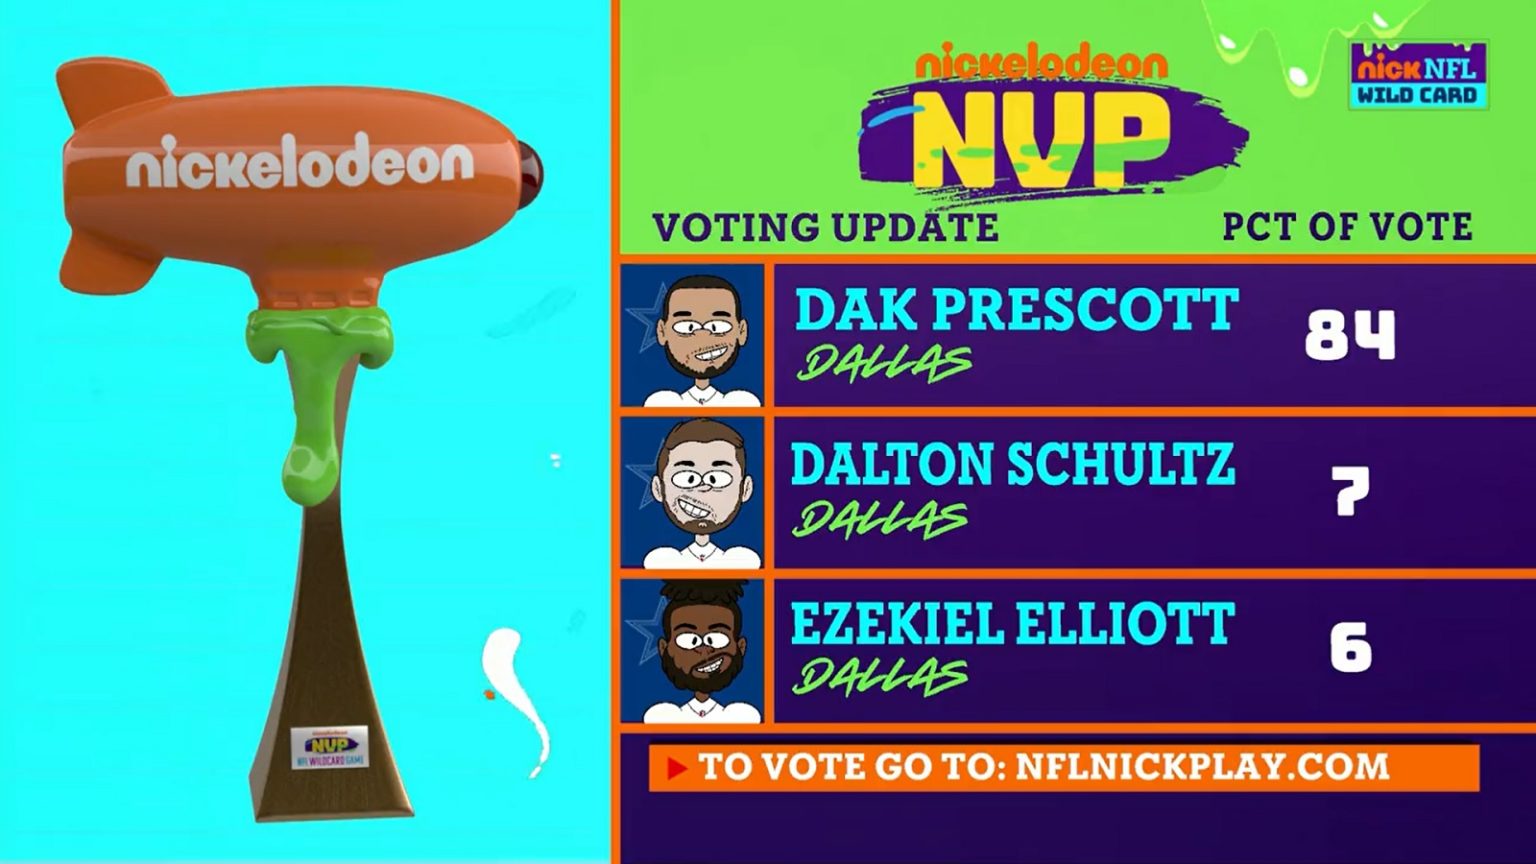 Nickelodeon Nvp Vote Gets Turned Into Joke Once Again